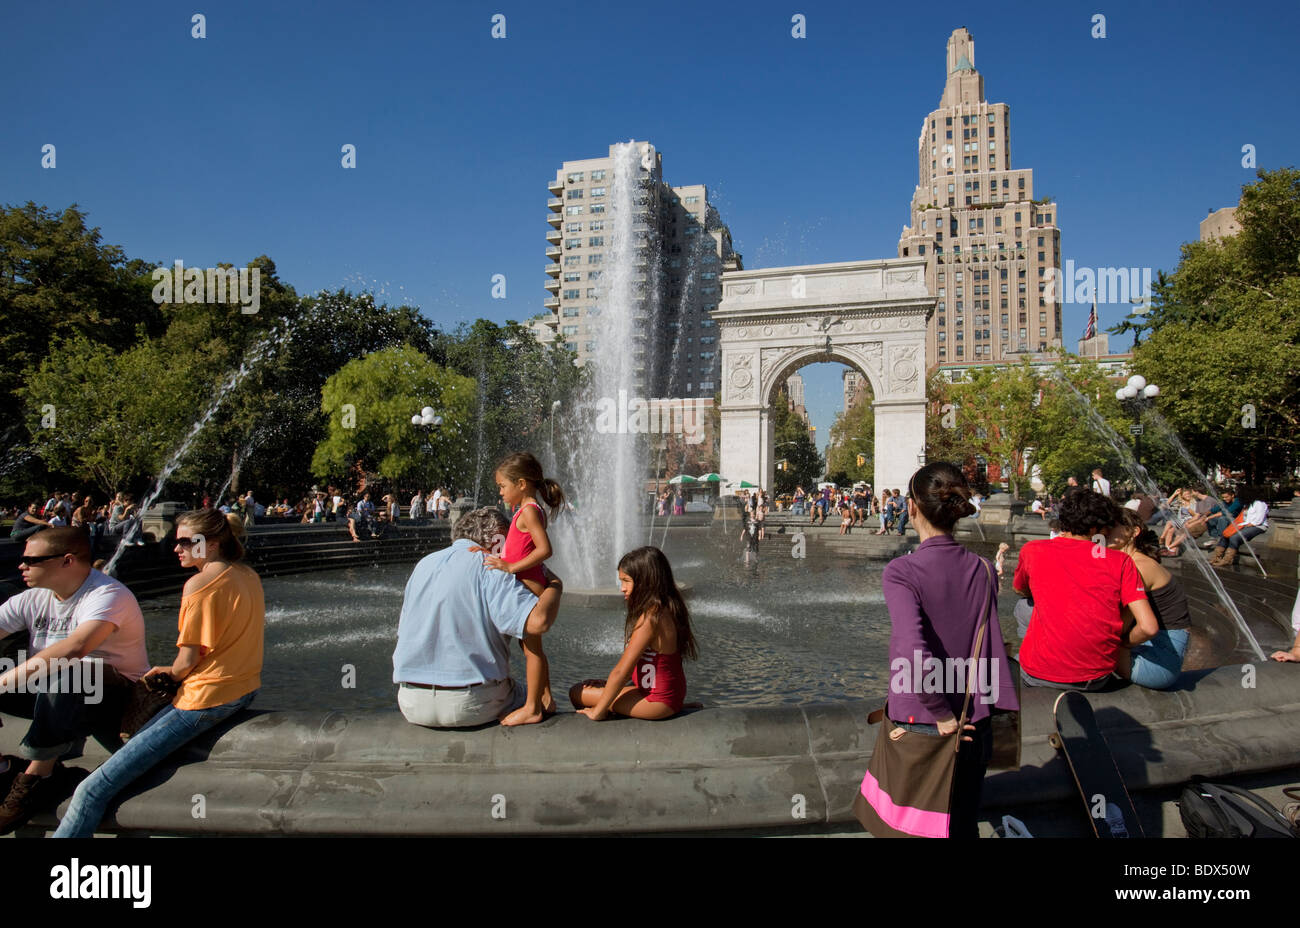 Washington Square Park, New York City Stock Photo